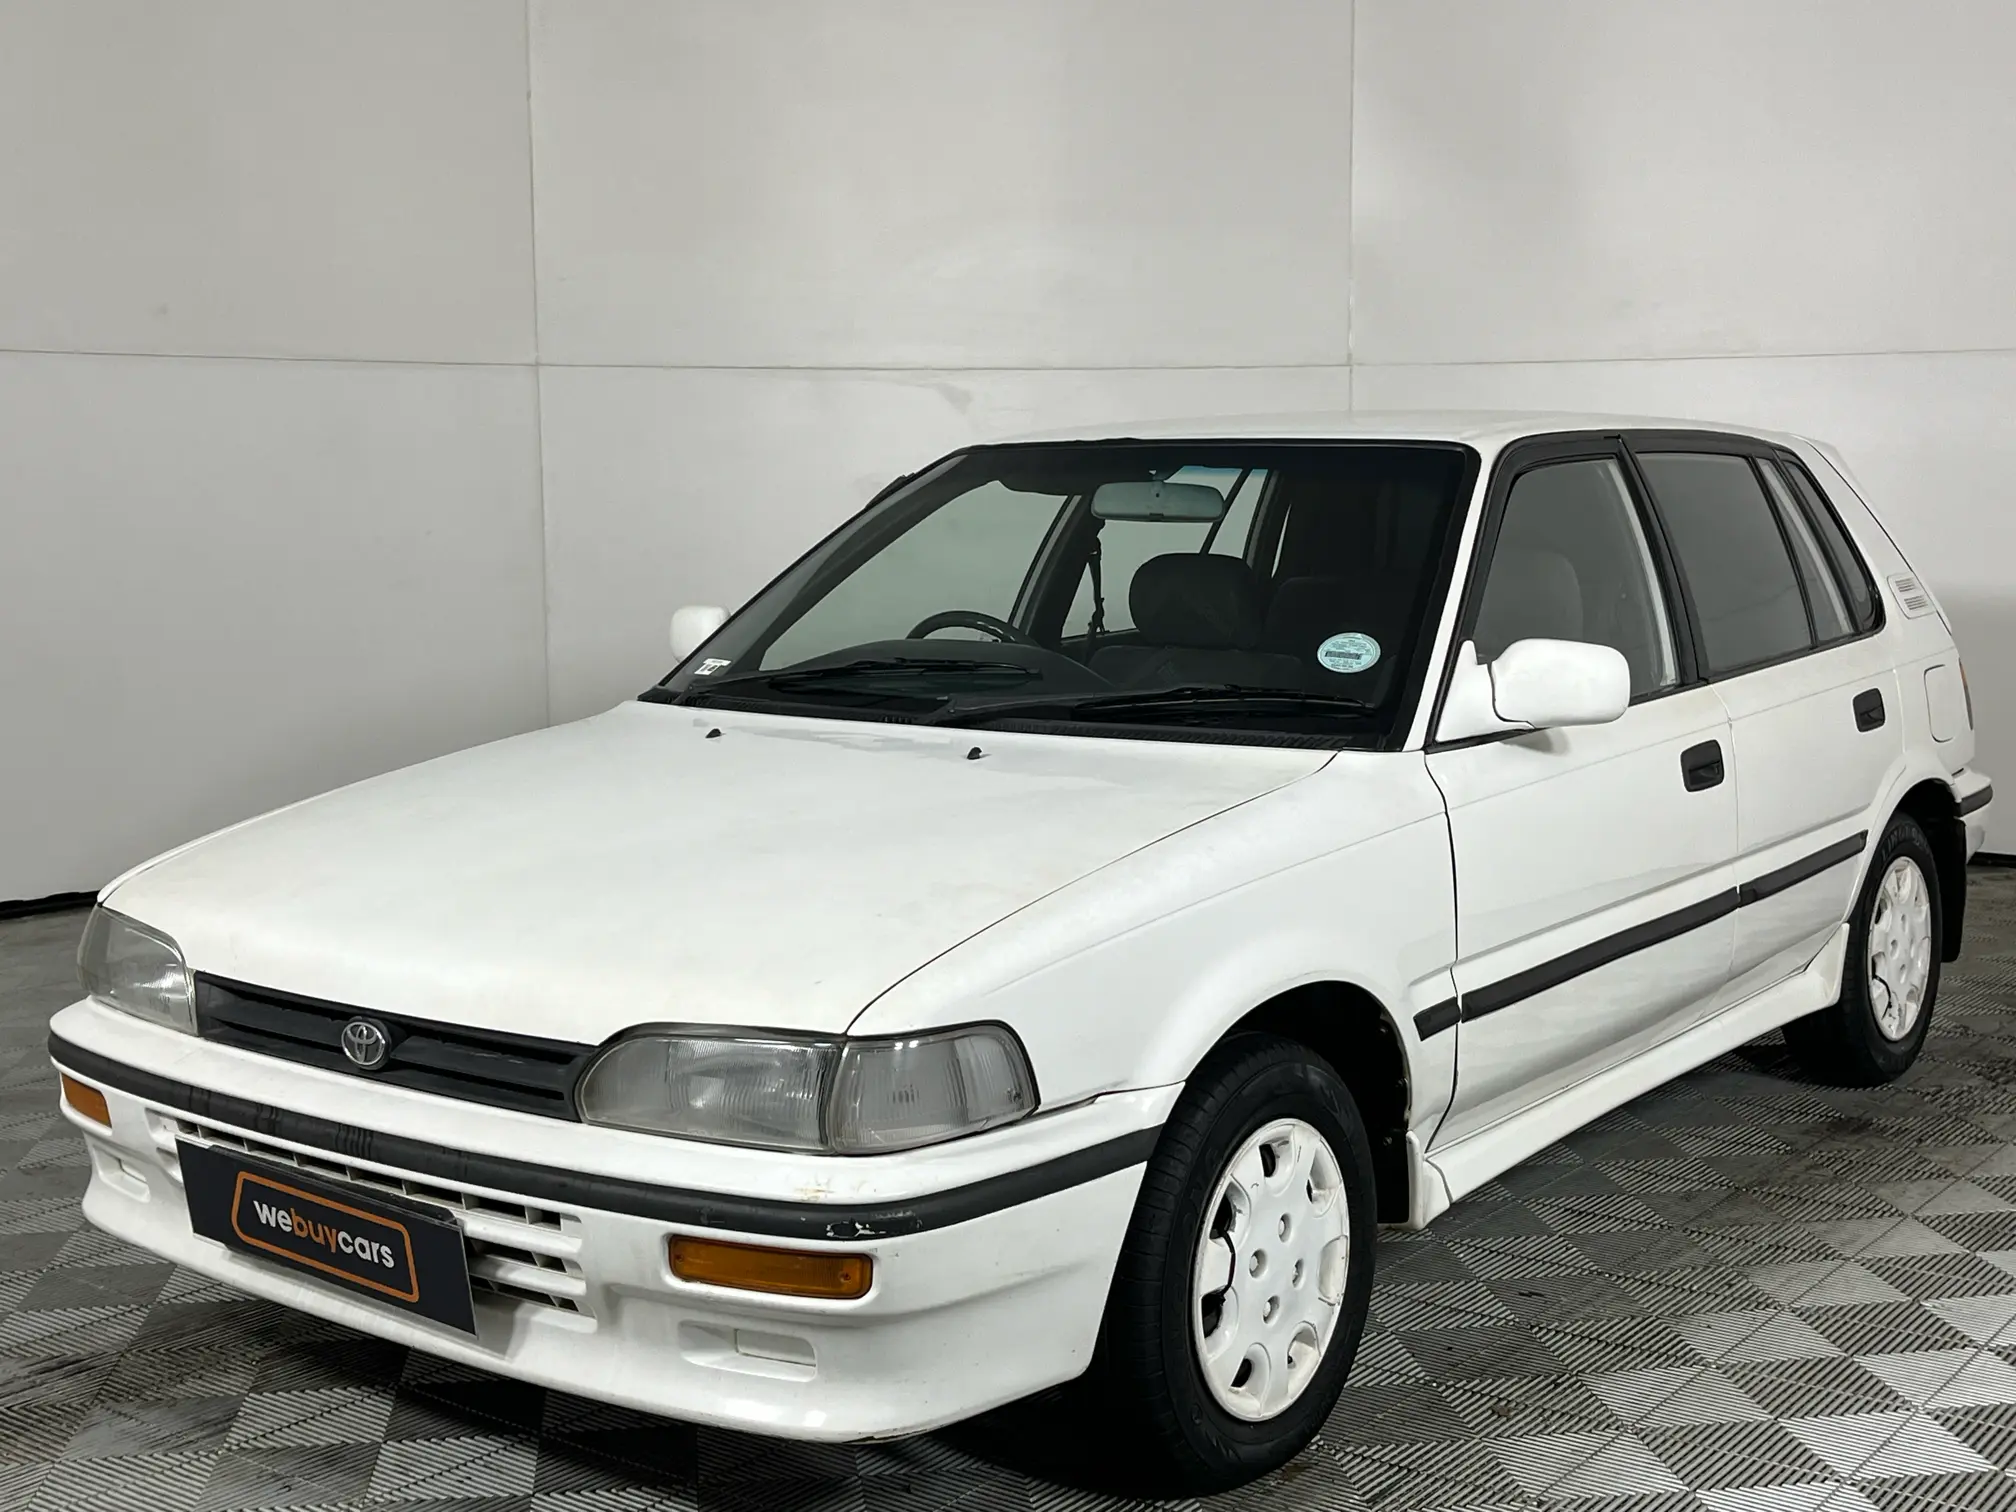 1996 Toyota Conquest 130